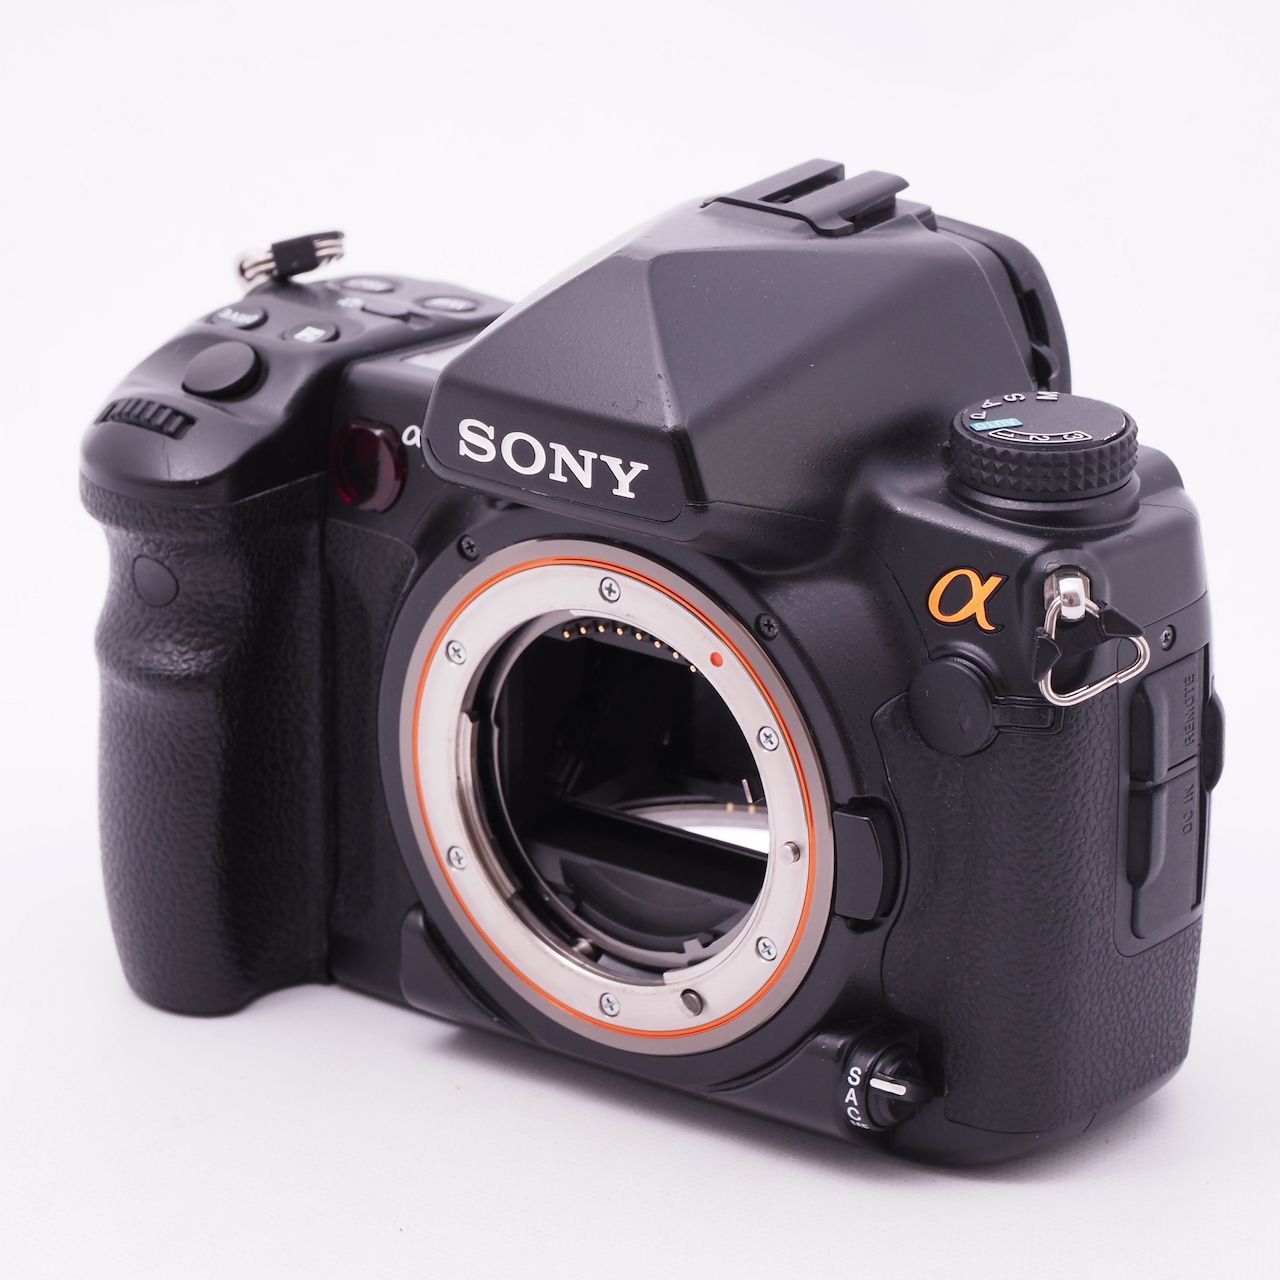 SONY ソニー デジタル一眼レフ α900 ボディ DSLR-A900 カメラ本舗｜Camera honpo メルカリ